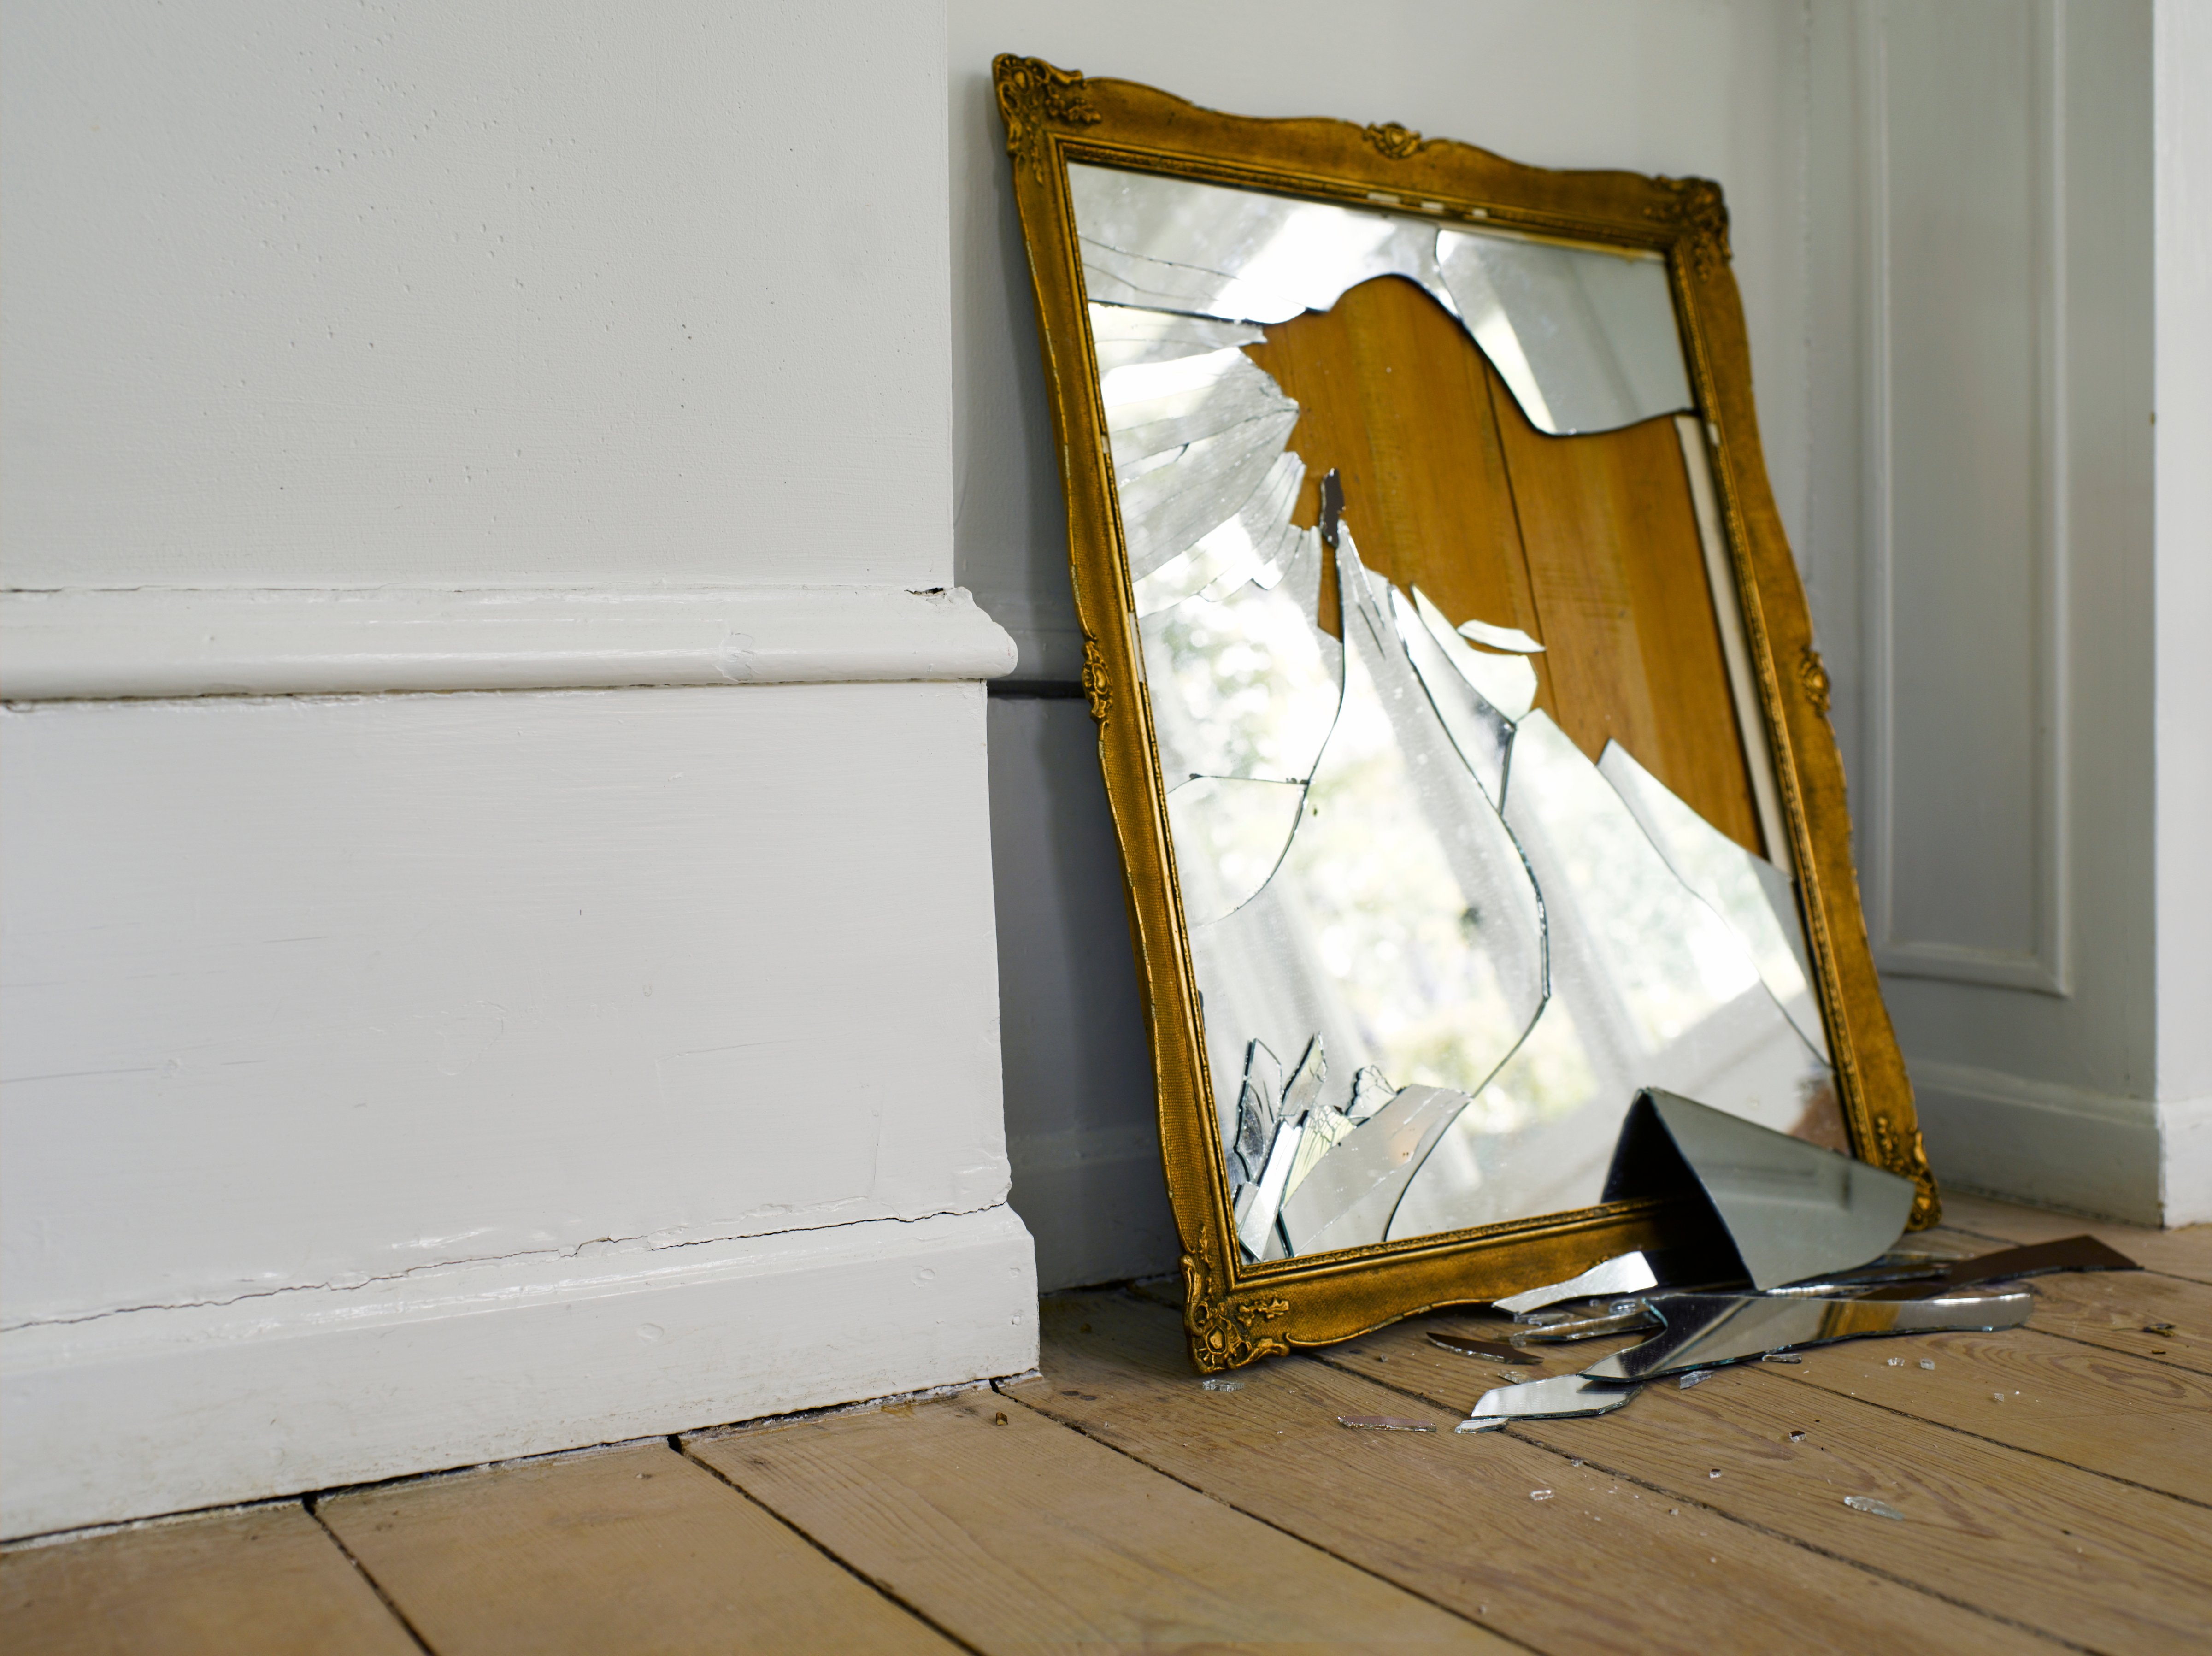 smashed mirror (Soren Hald—Getty Images)